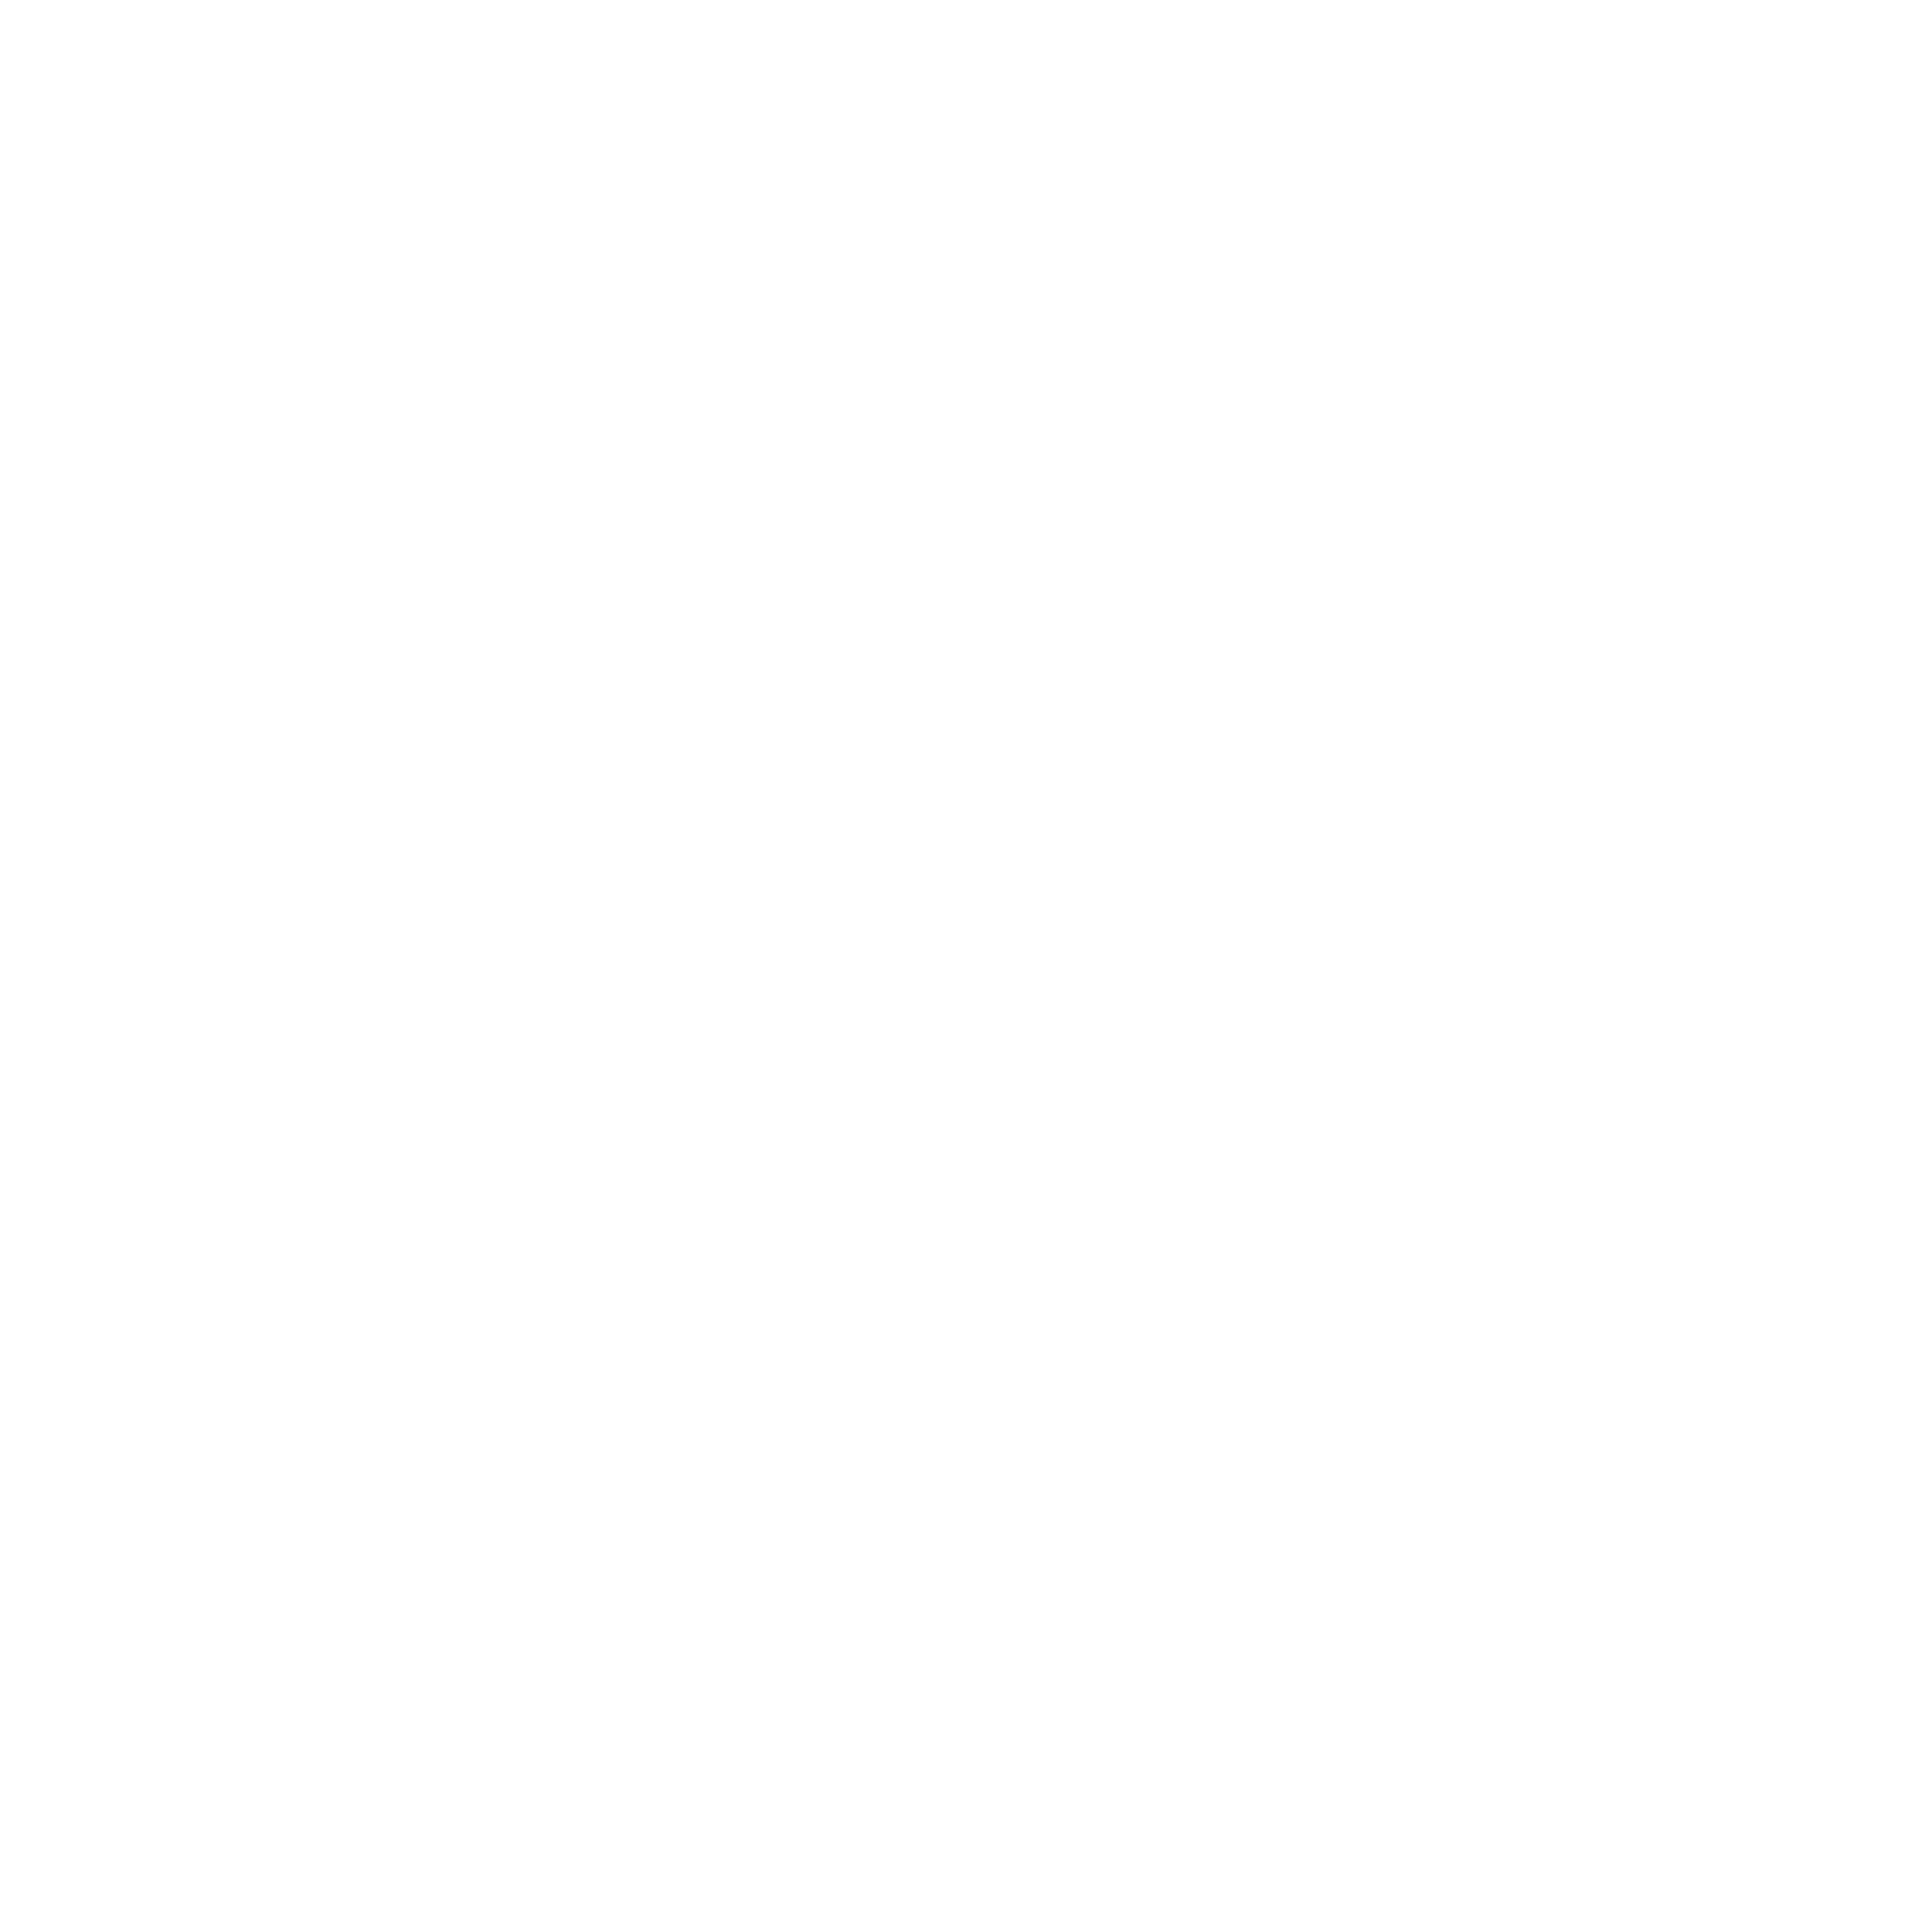 Página Oficial de Turismo de Tenerife